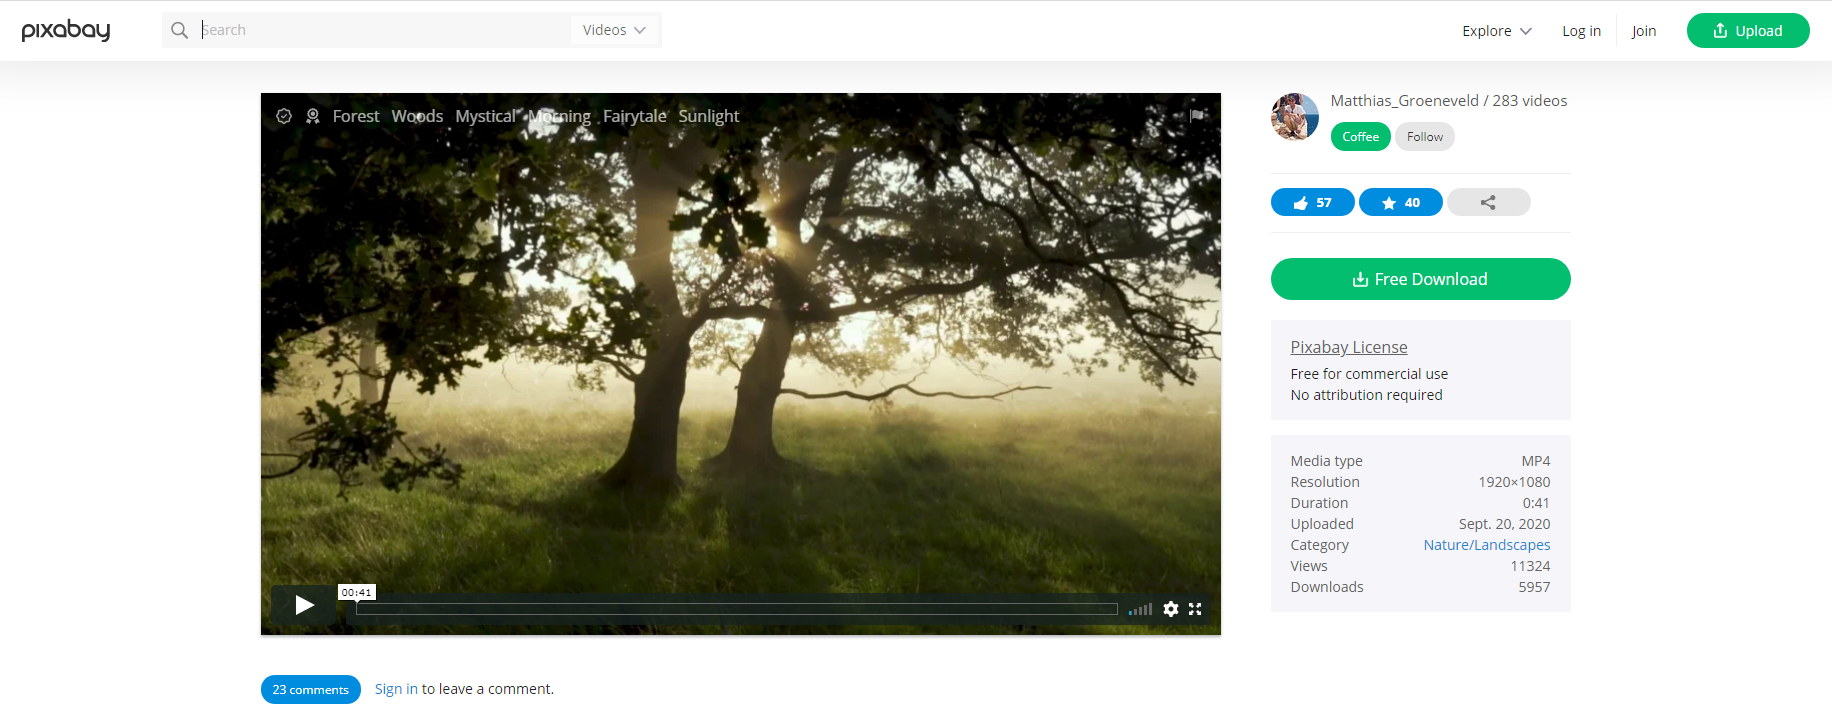 Pixabay סרטונים חינמיים לקמפיינים